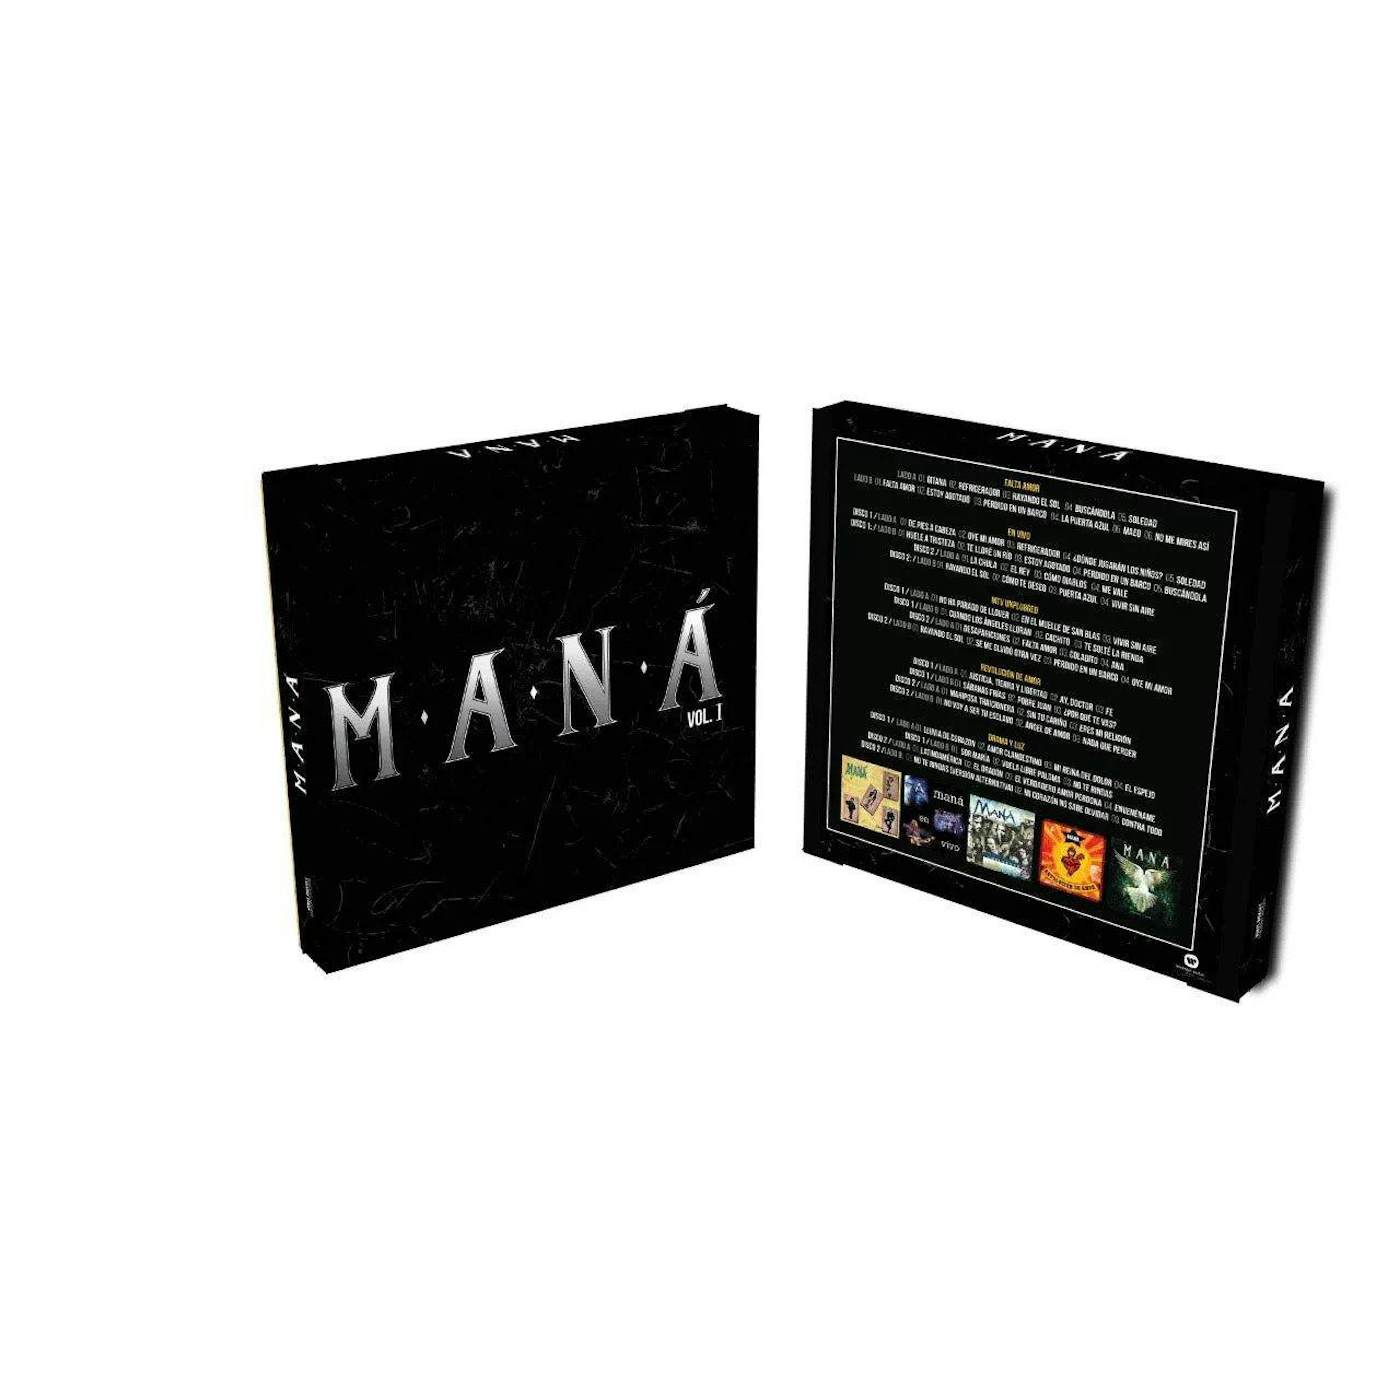  Maná Remastered Vol. 1 (Box Set) Vinyl Record